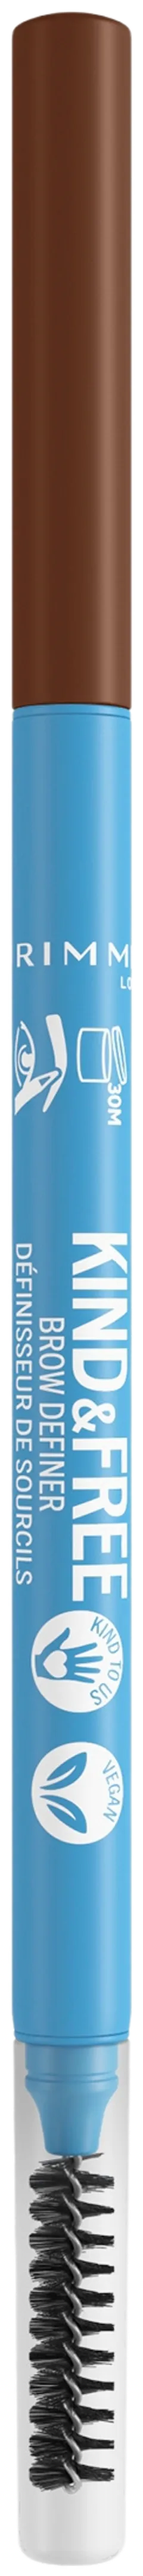 Rimmel Kind & Free Dual Ended Brow Definer 0,09 g 002 Taupe, kulmakynä - Taupe - 1